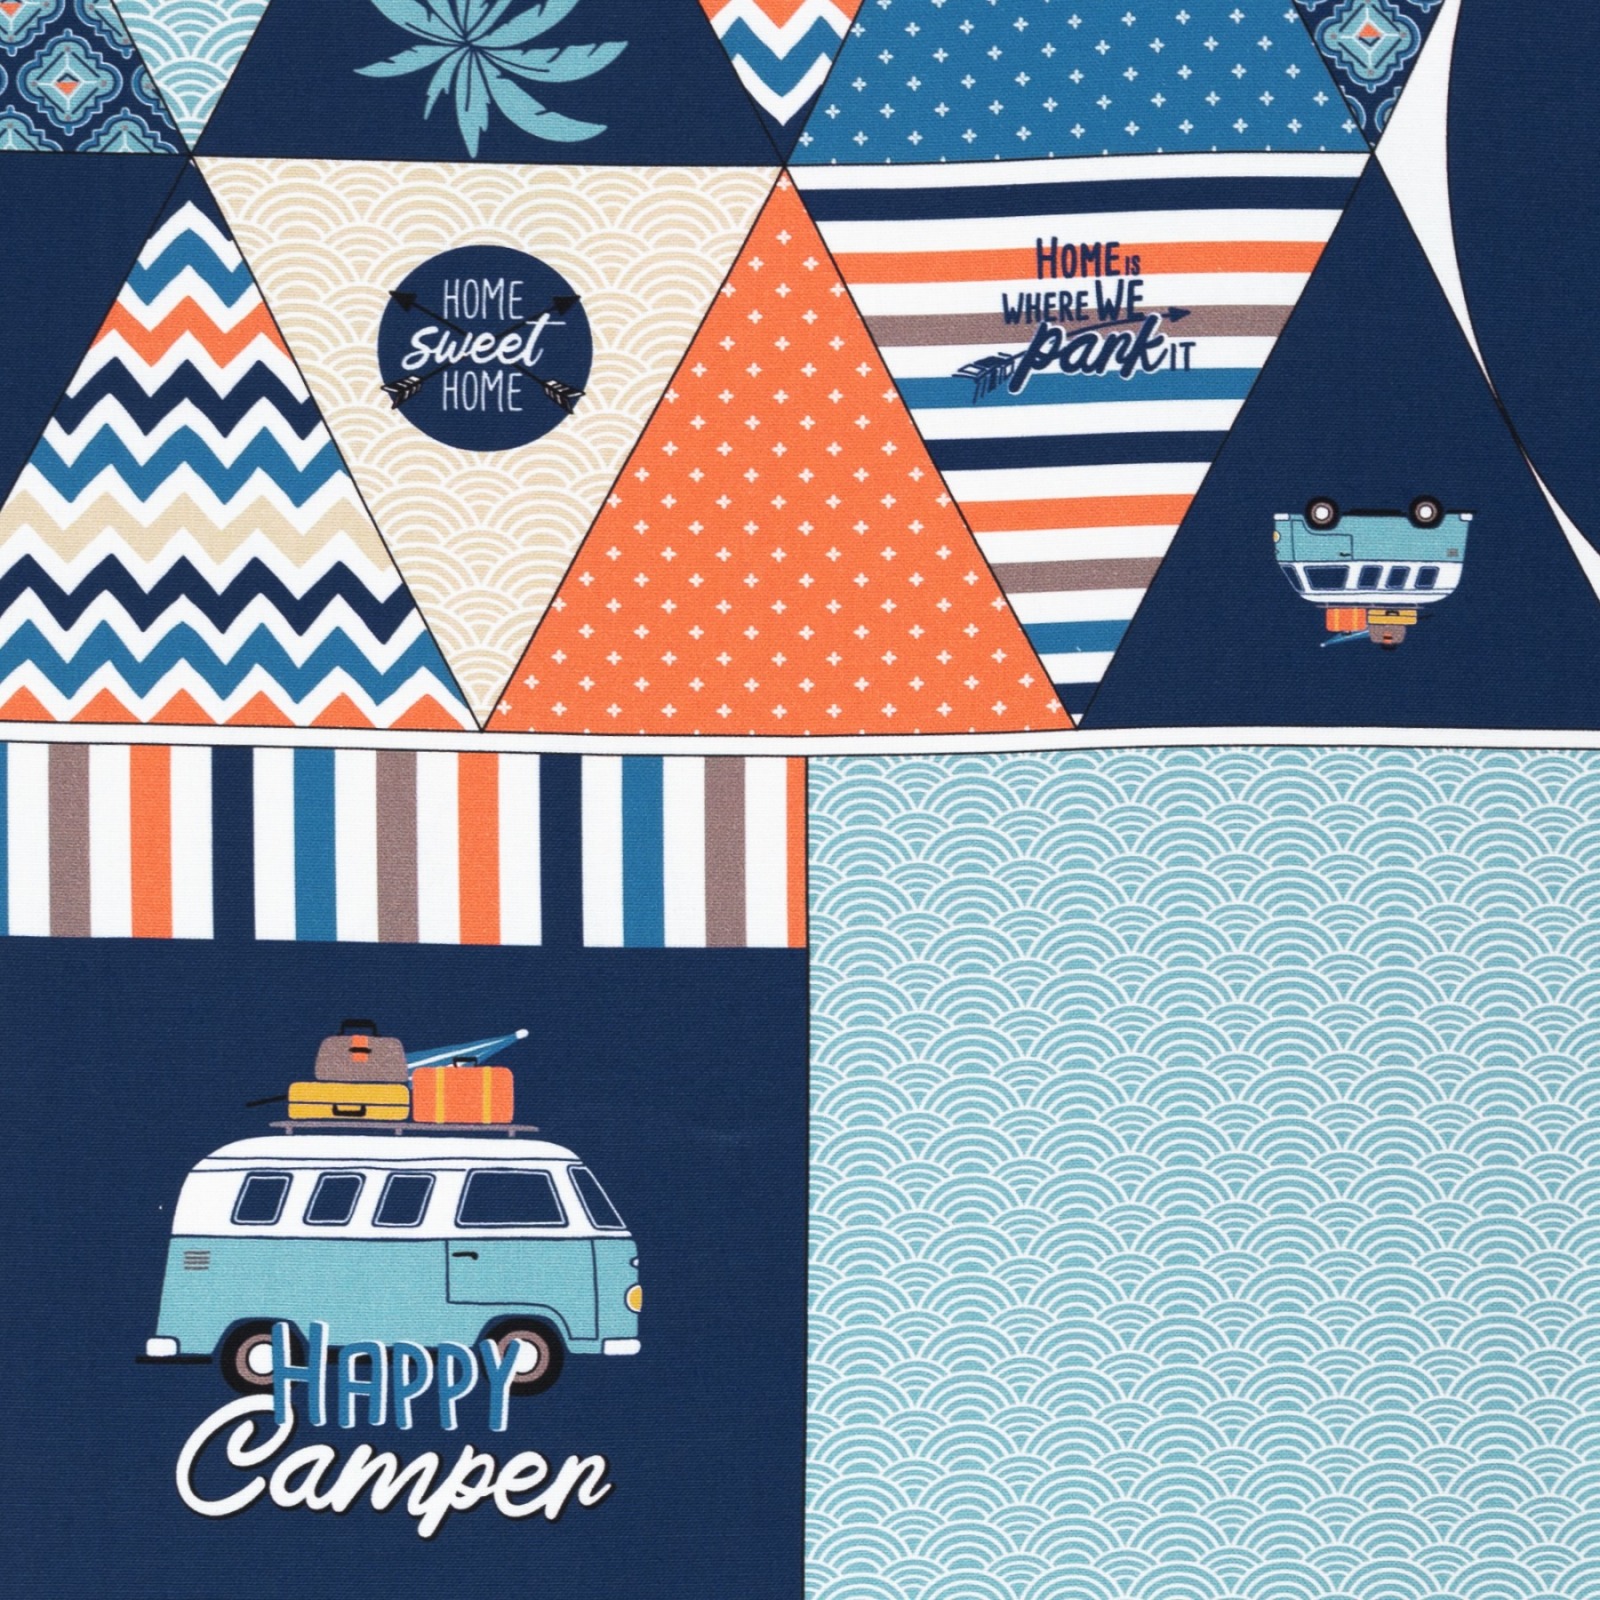 1Panel Canvas Happy Camping by Steinbeck Nähset Maritim blau weiß türkis 3